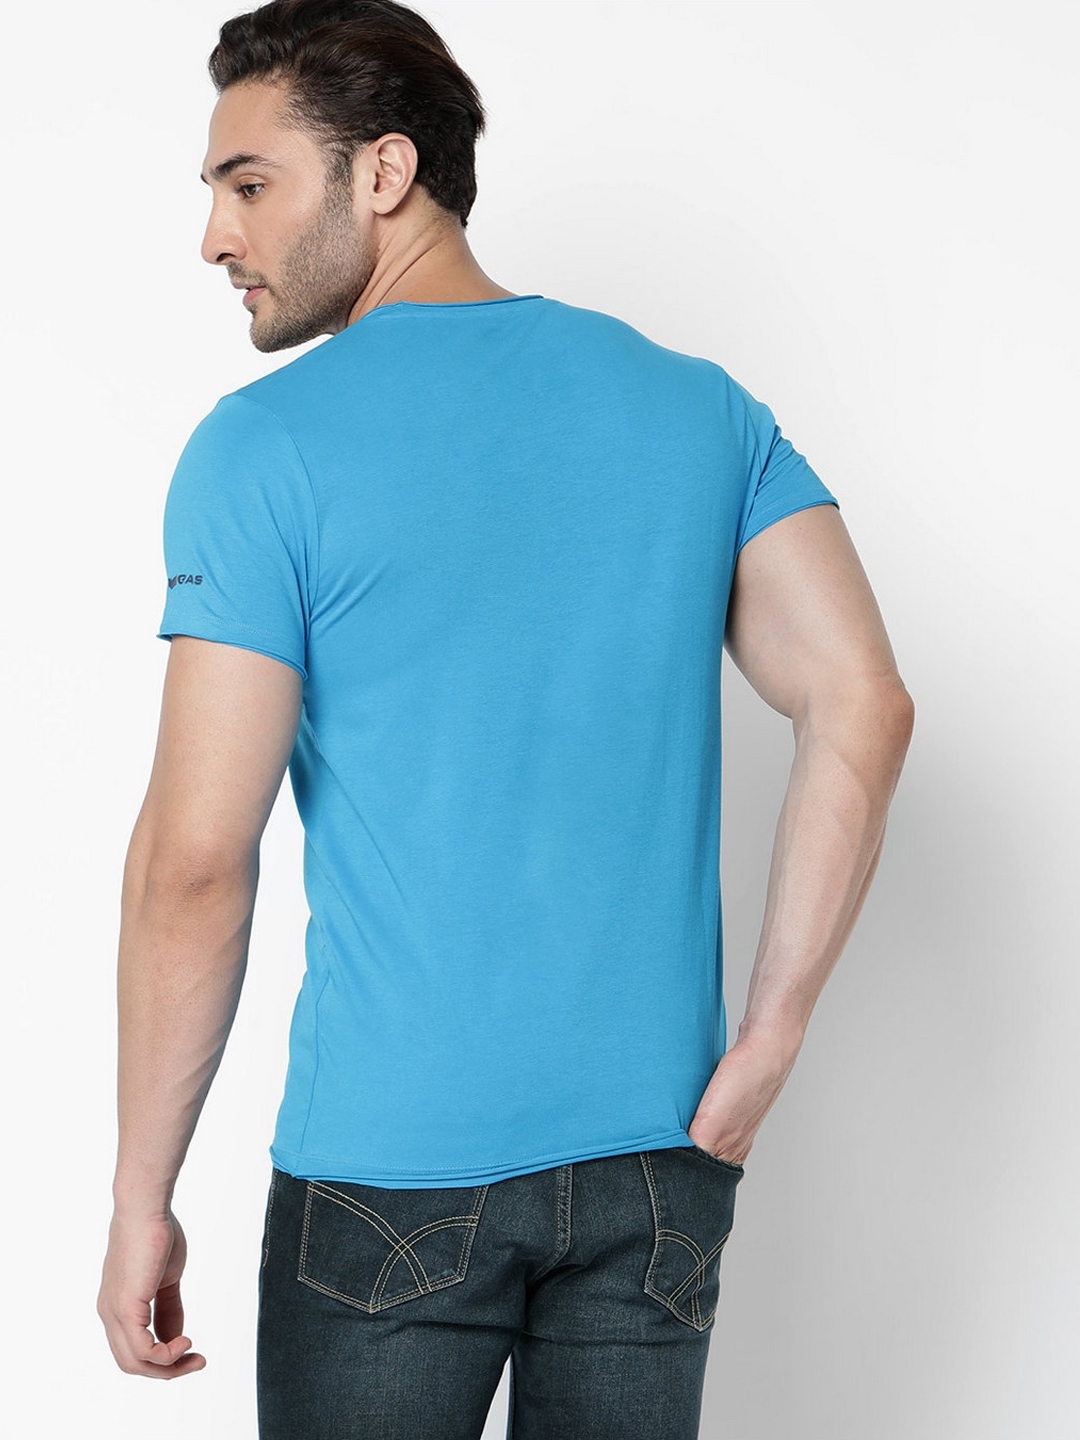 Scuba Basic Slim Fit V-neck T-shirt